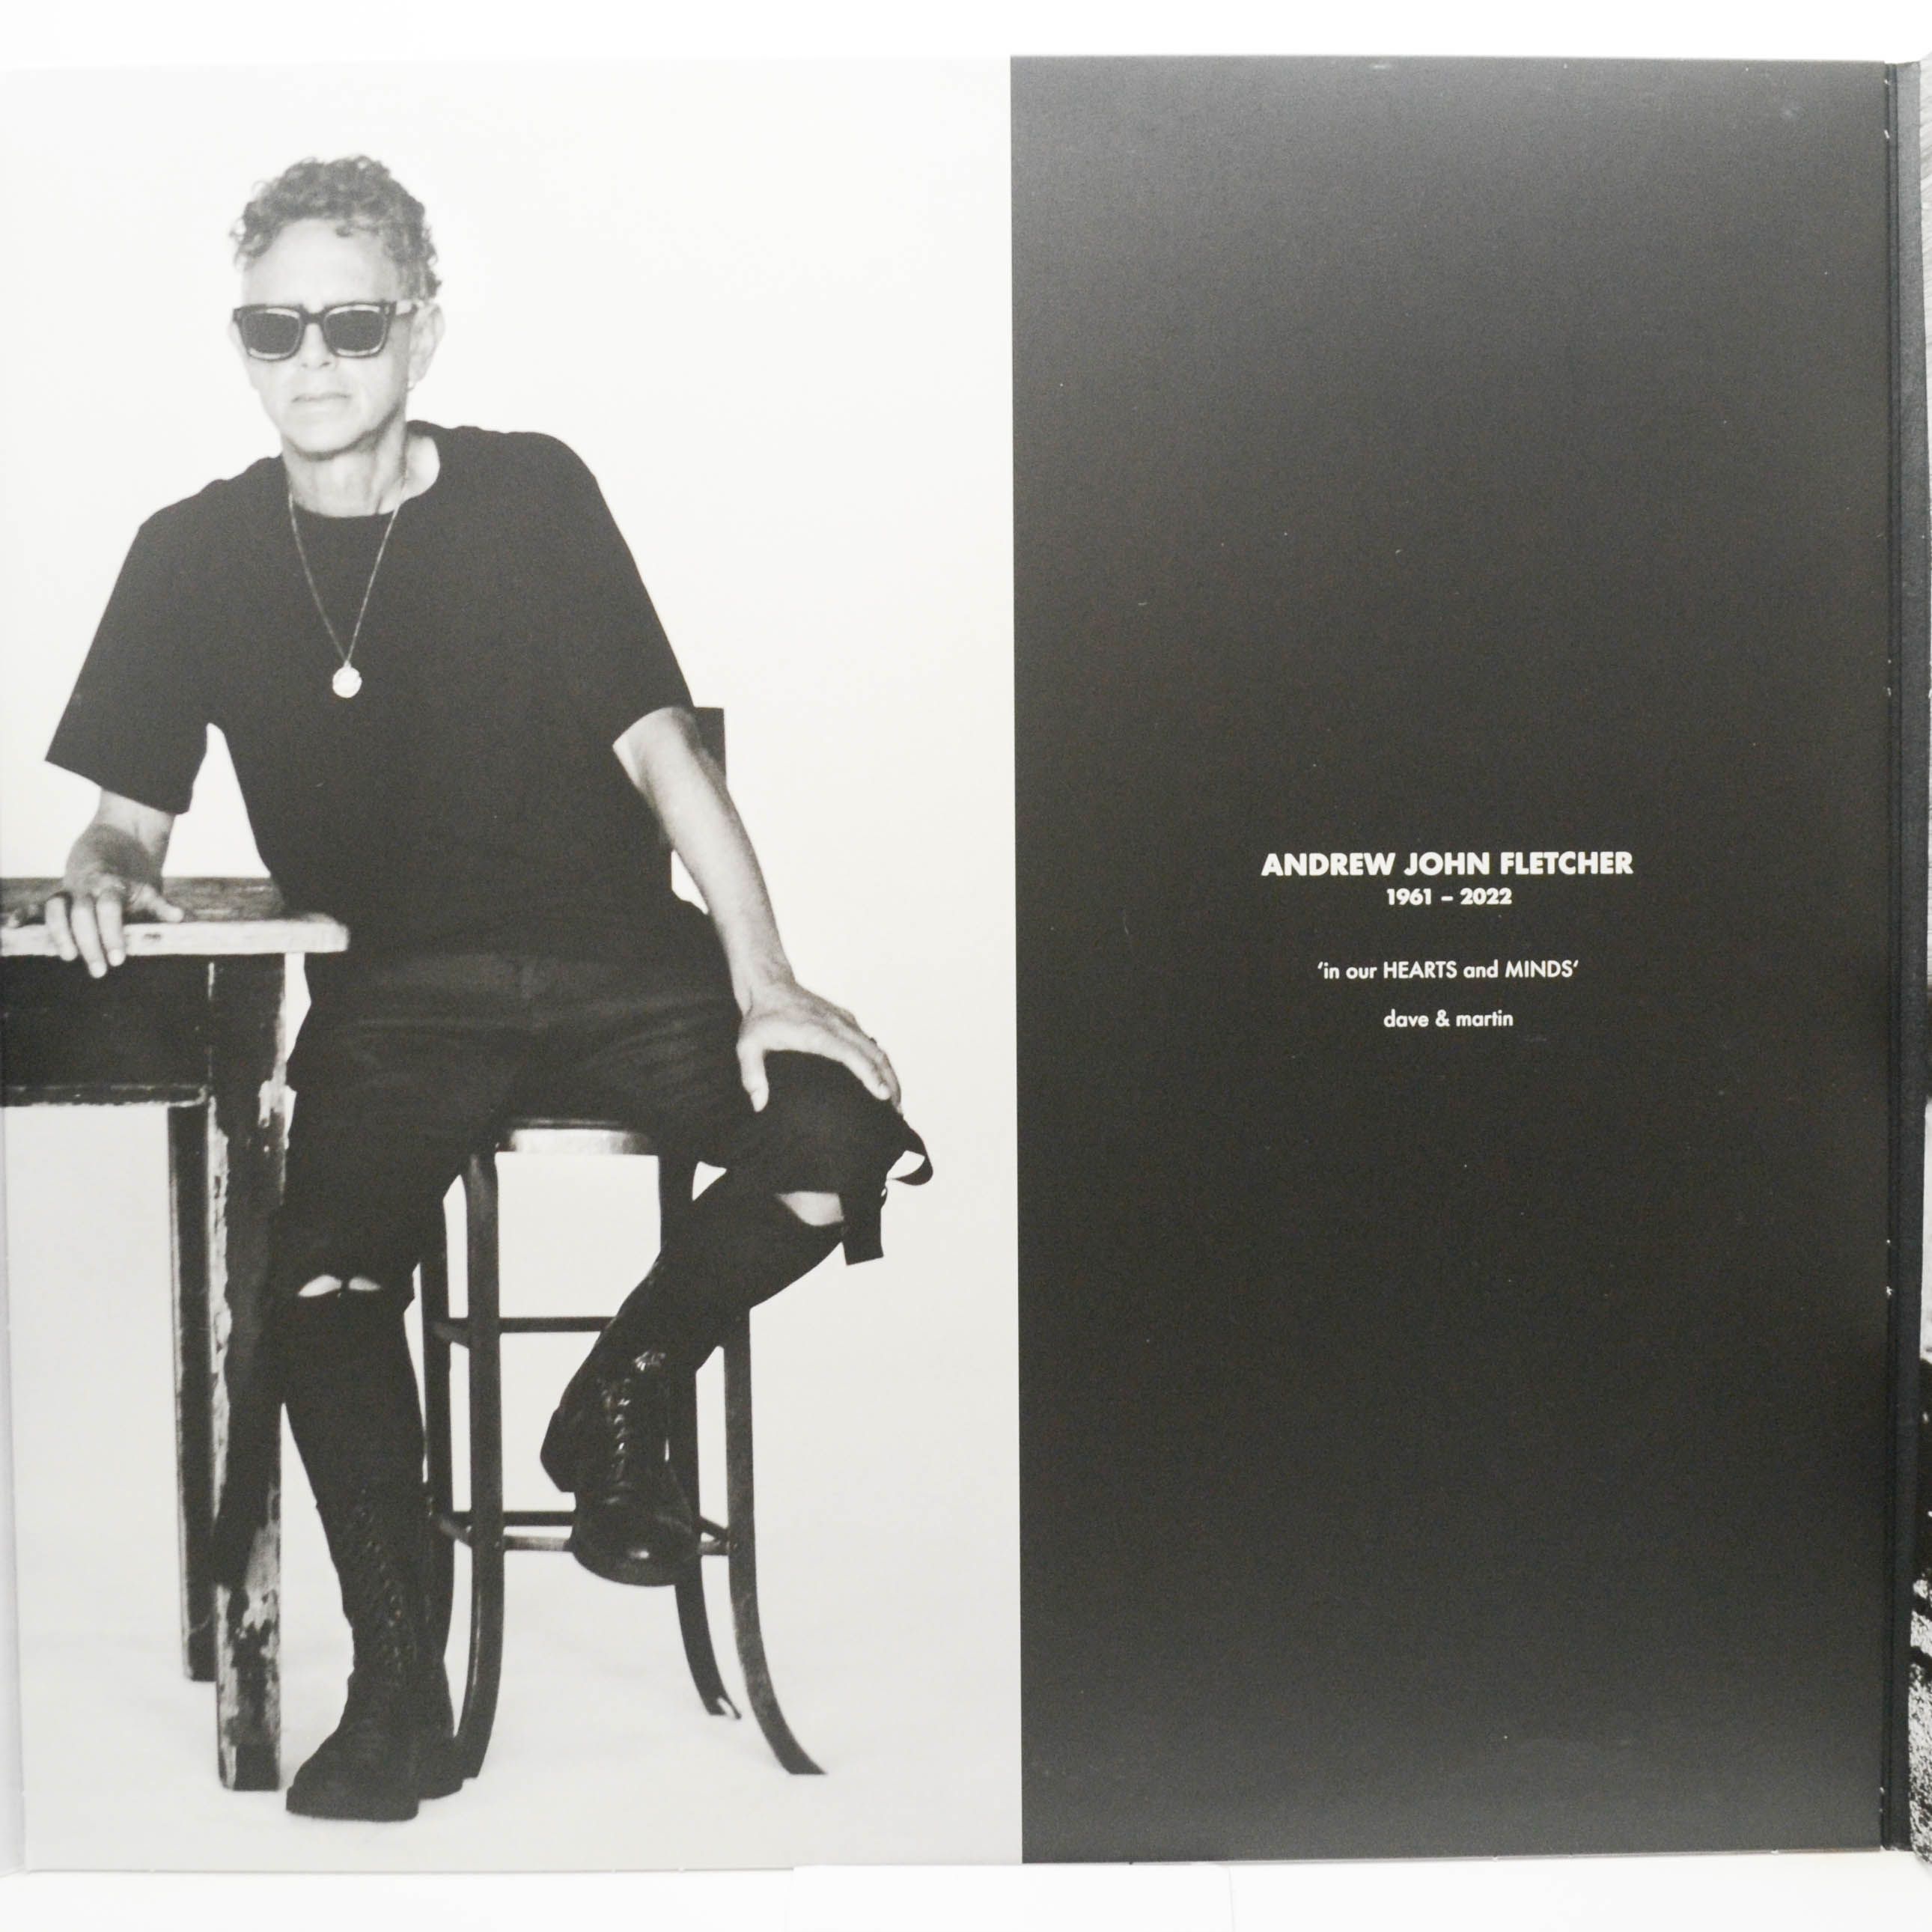 Depeche Mode — Memento Mori (2LP), 2023